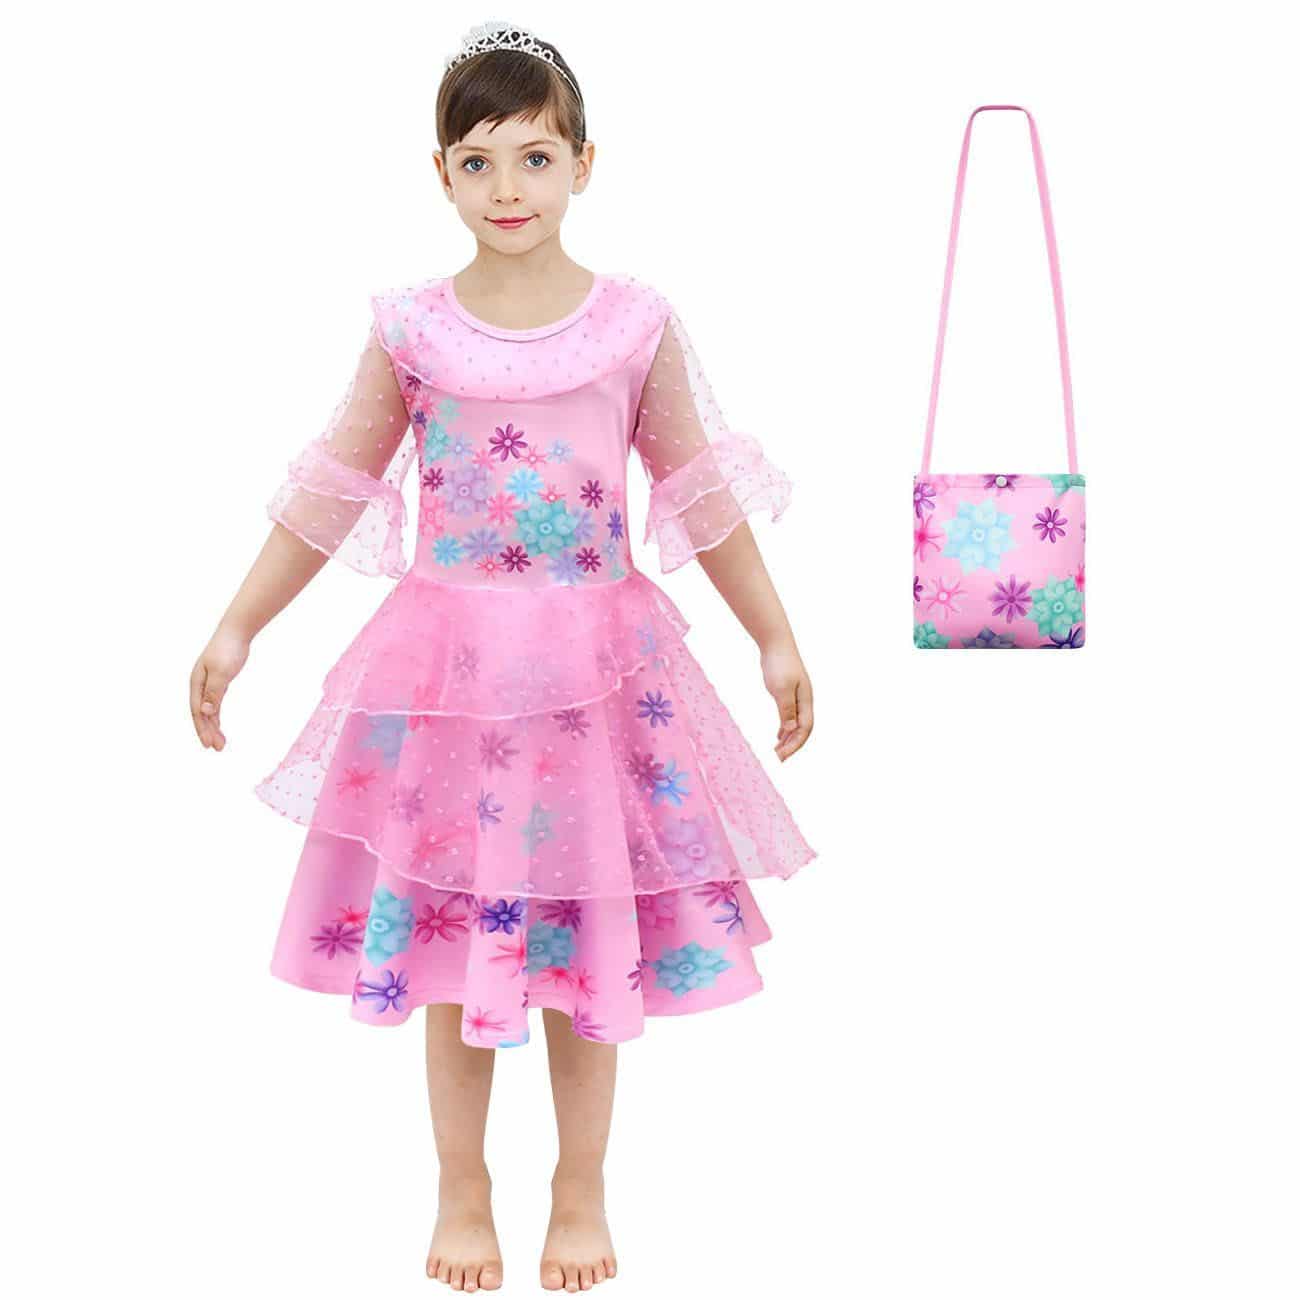 Isabela Encanto Dress Princess Play Dress with Bag - Pink